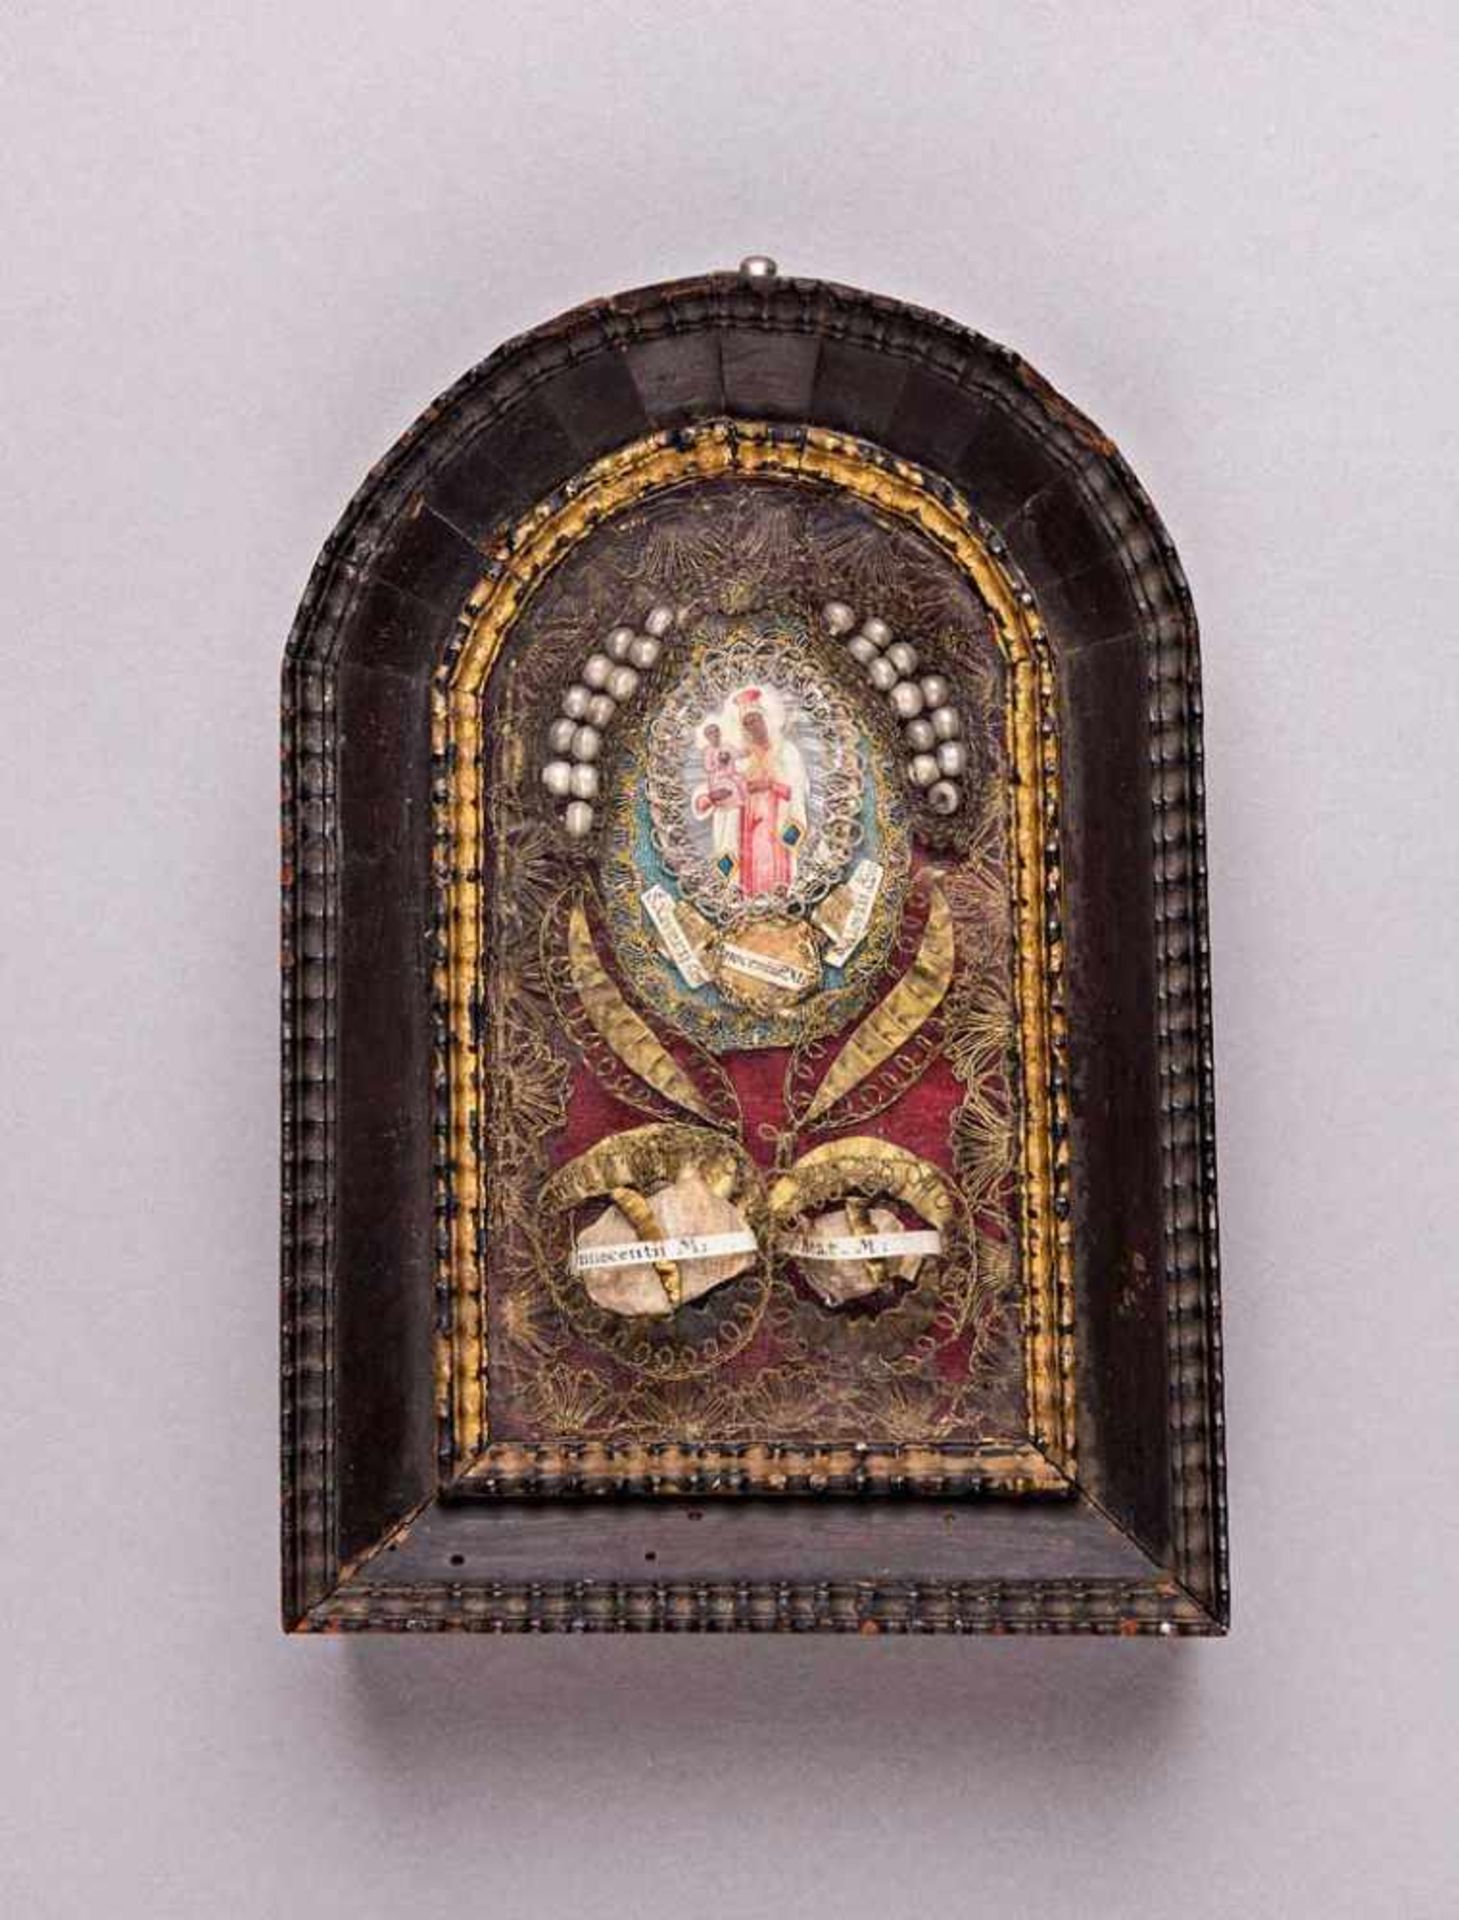 Reliquienbild. Miniatur mit schwarzer Madonna. Reliquien der Heiligen Xaver, Aloisius, Innocent